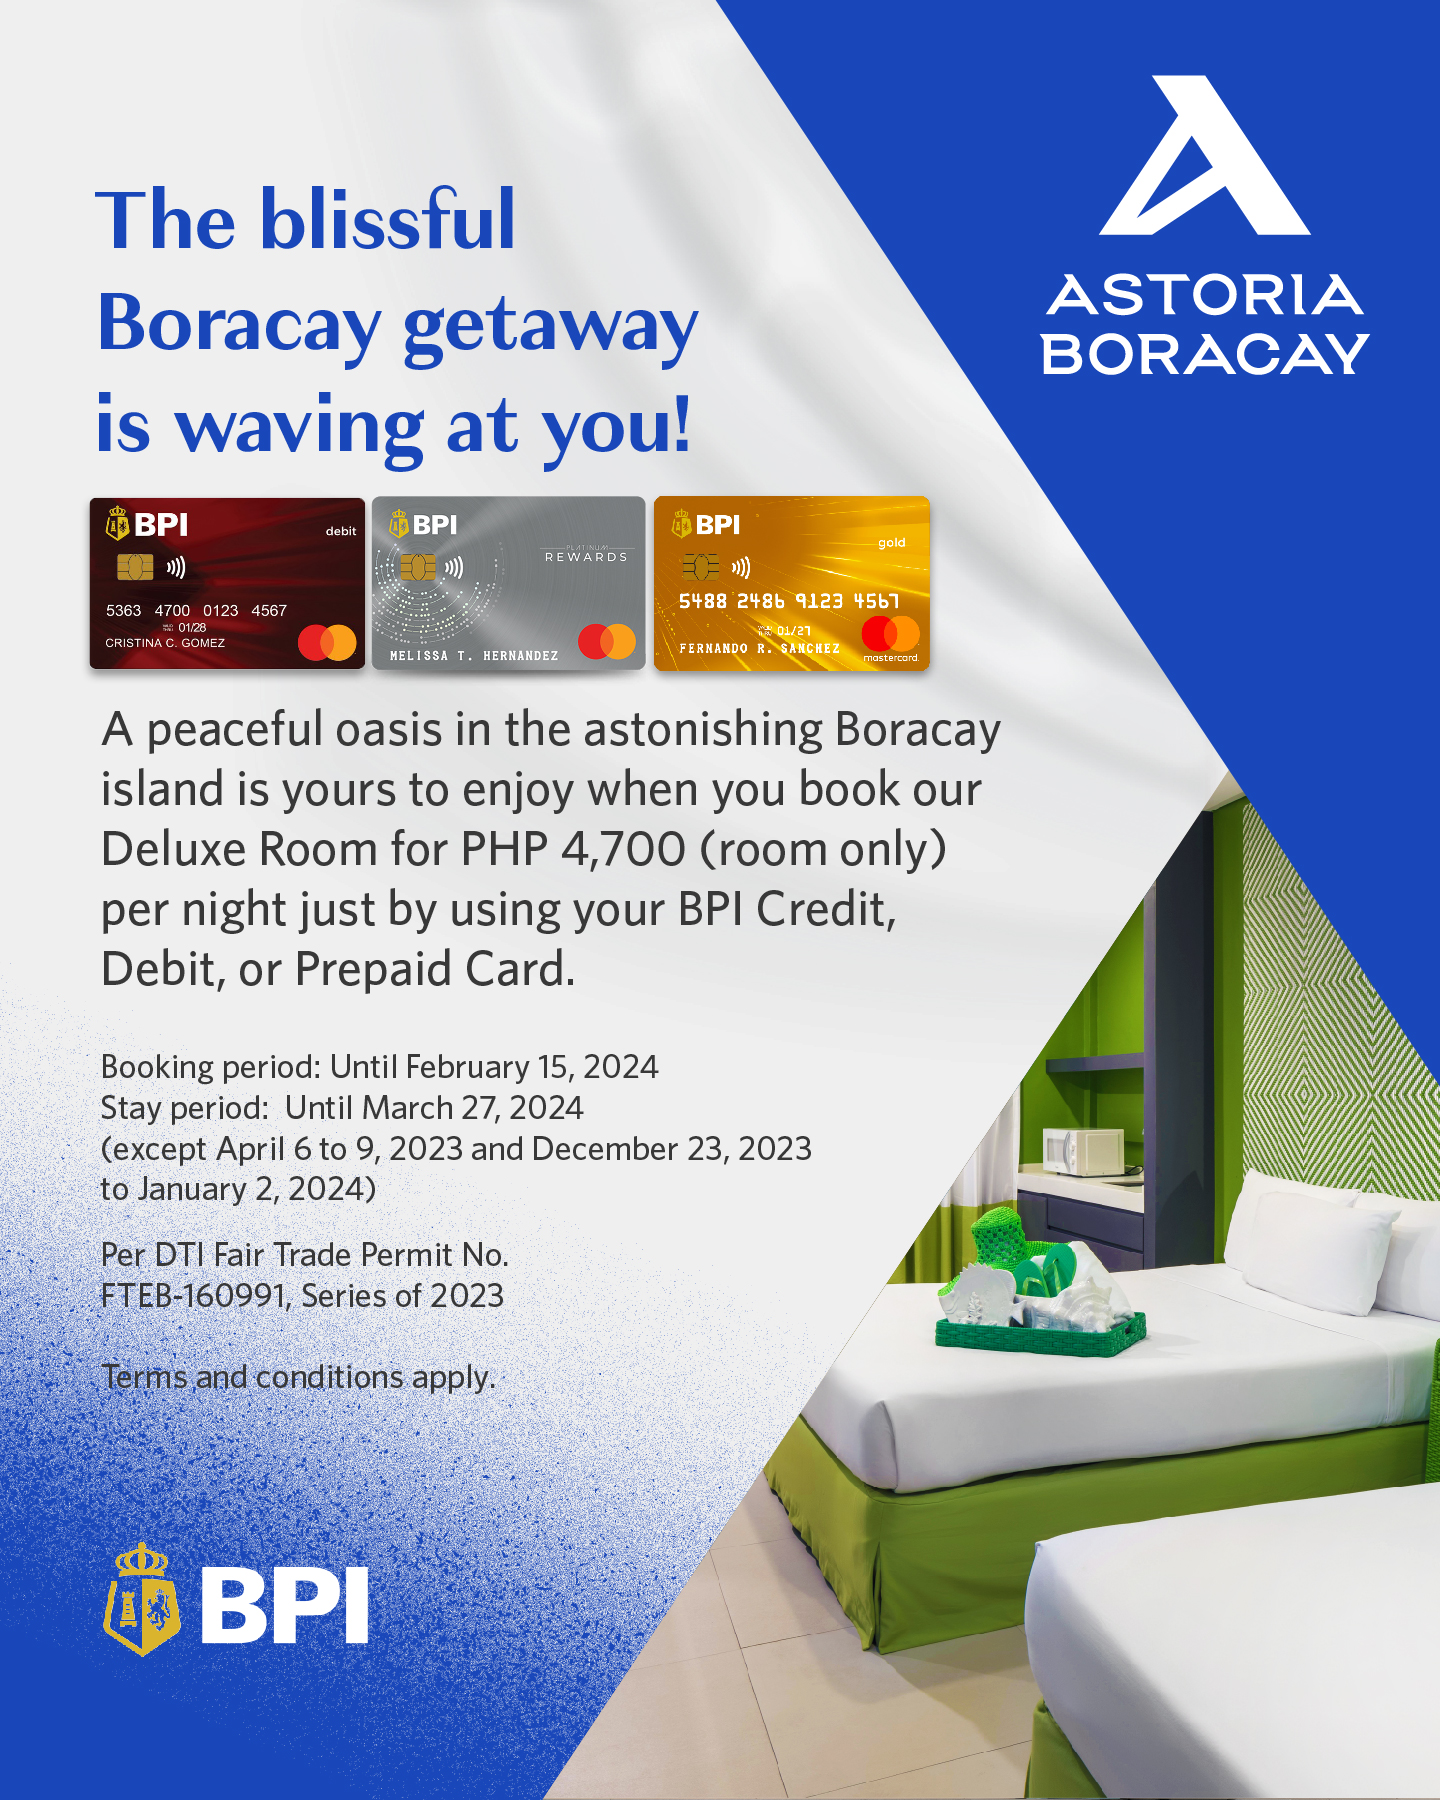 Bank of the Philippine Islands (BPI) Promo Astoria Boracay